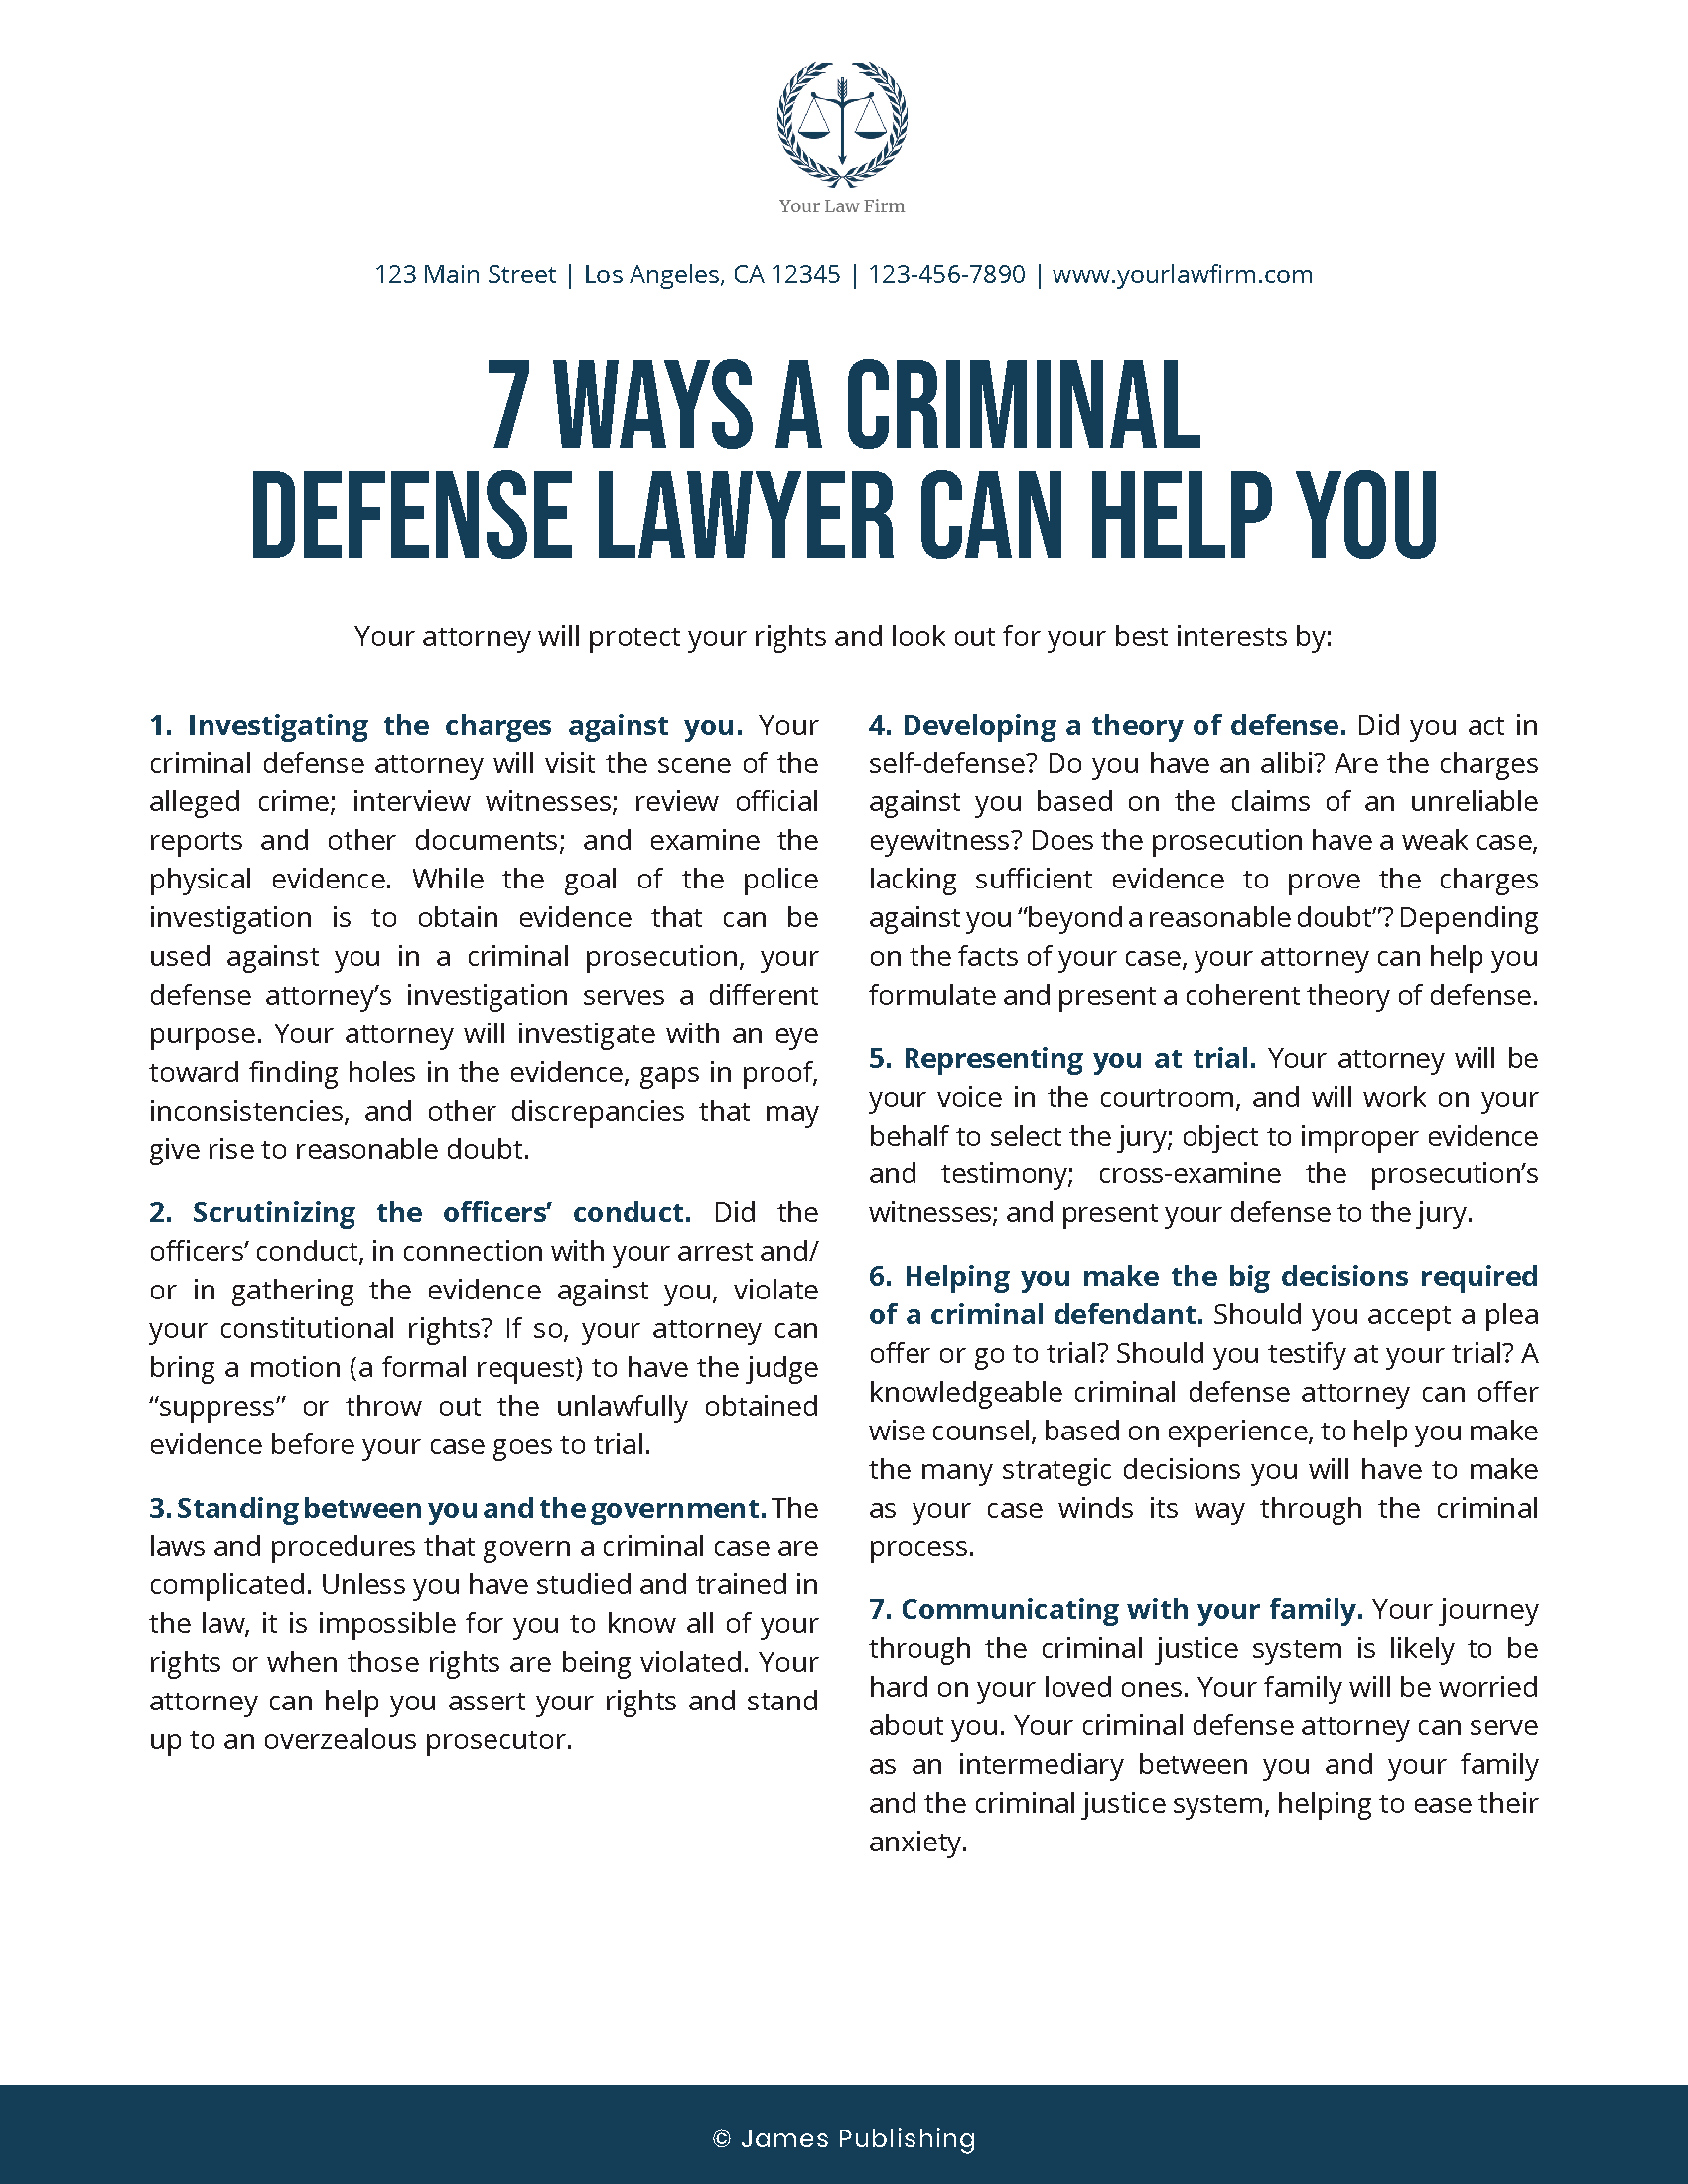 CRIM-11 7 Ways a Criminal Defense Lawyer Can Help